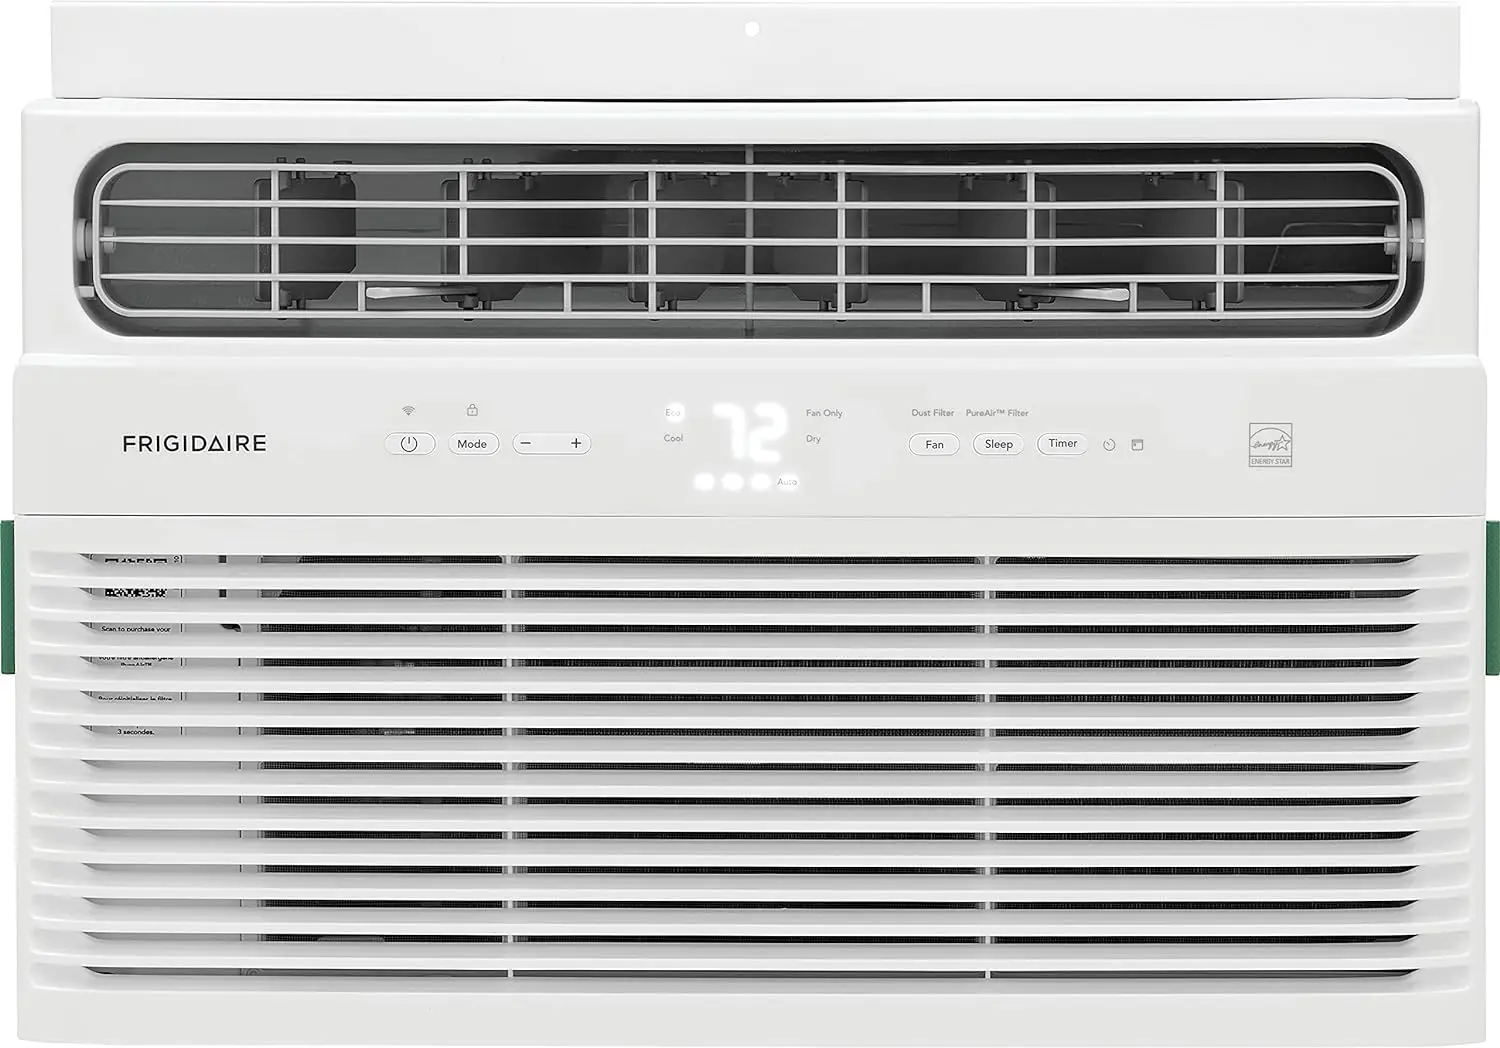 

rigidaire FHWC054WB1 Window Air Conditioner